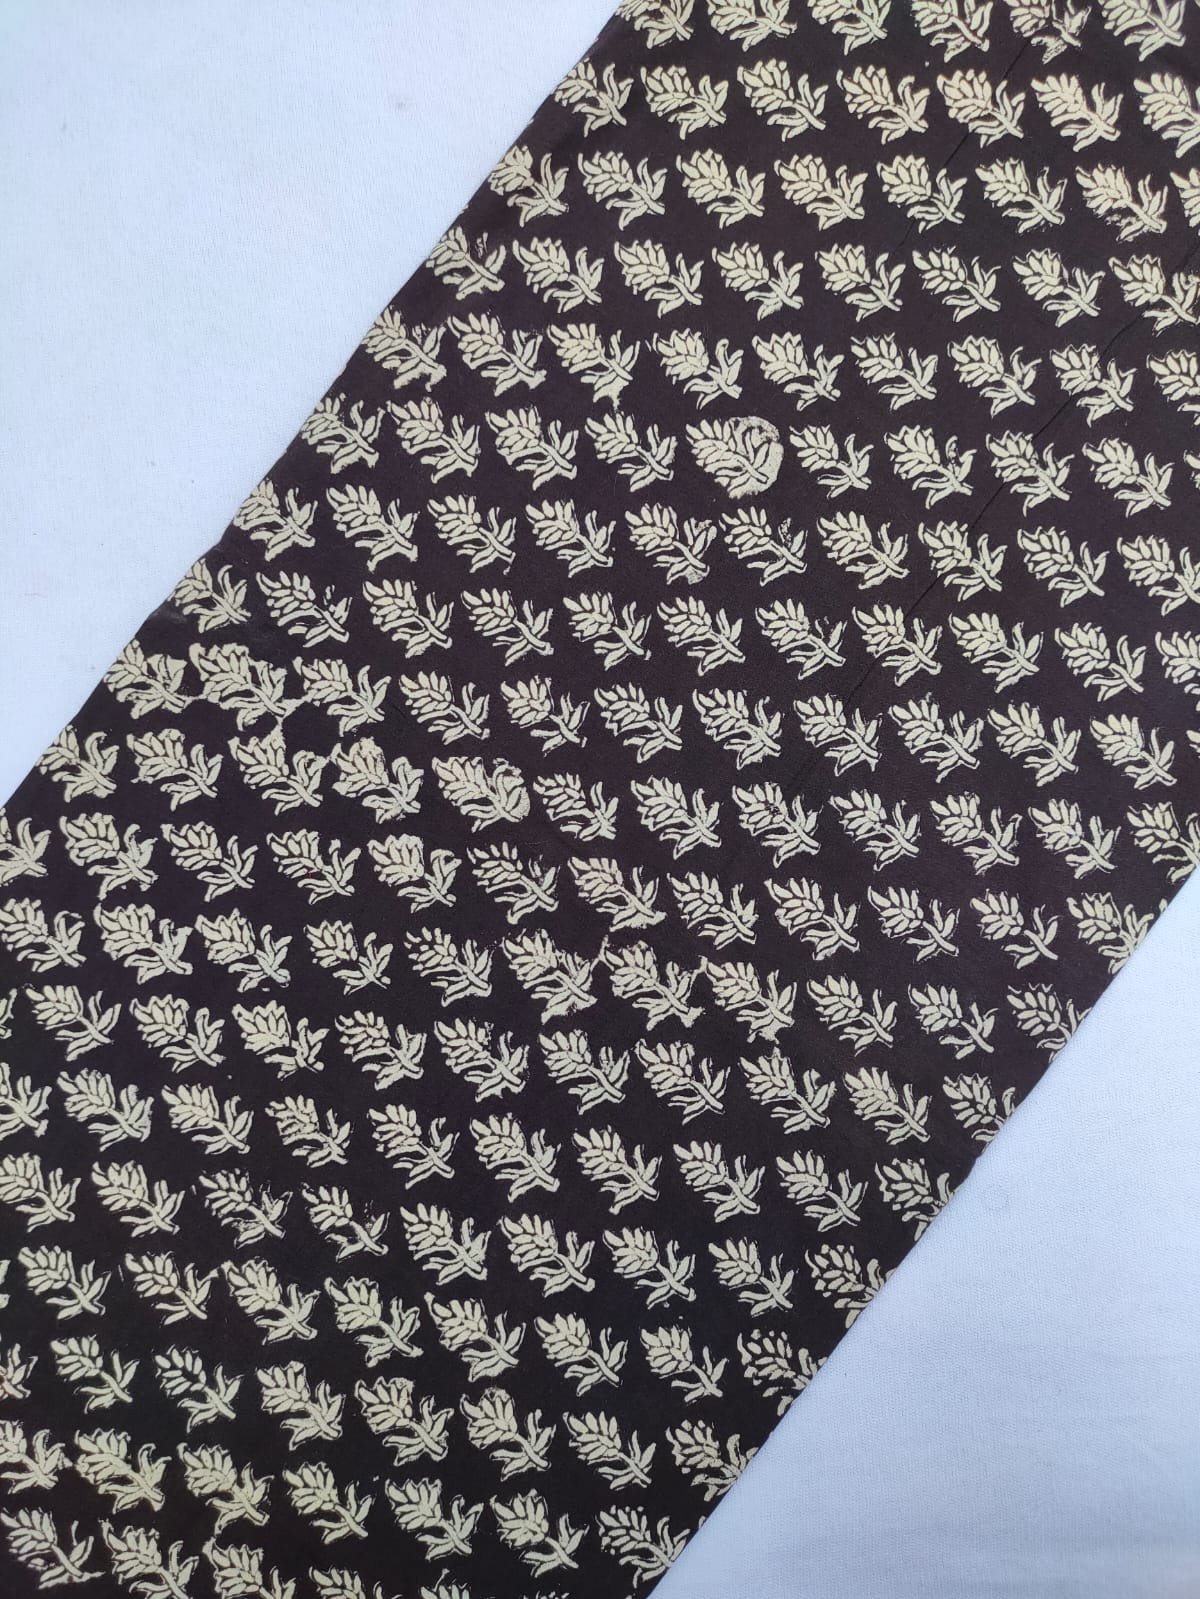 Jaipuri Hand Block Printed Pure Cotton Fabric In Running Length - JBRS504